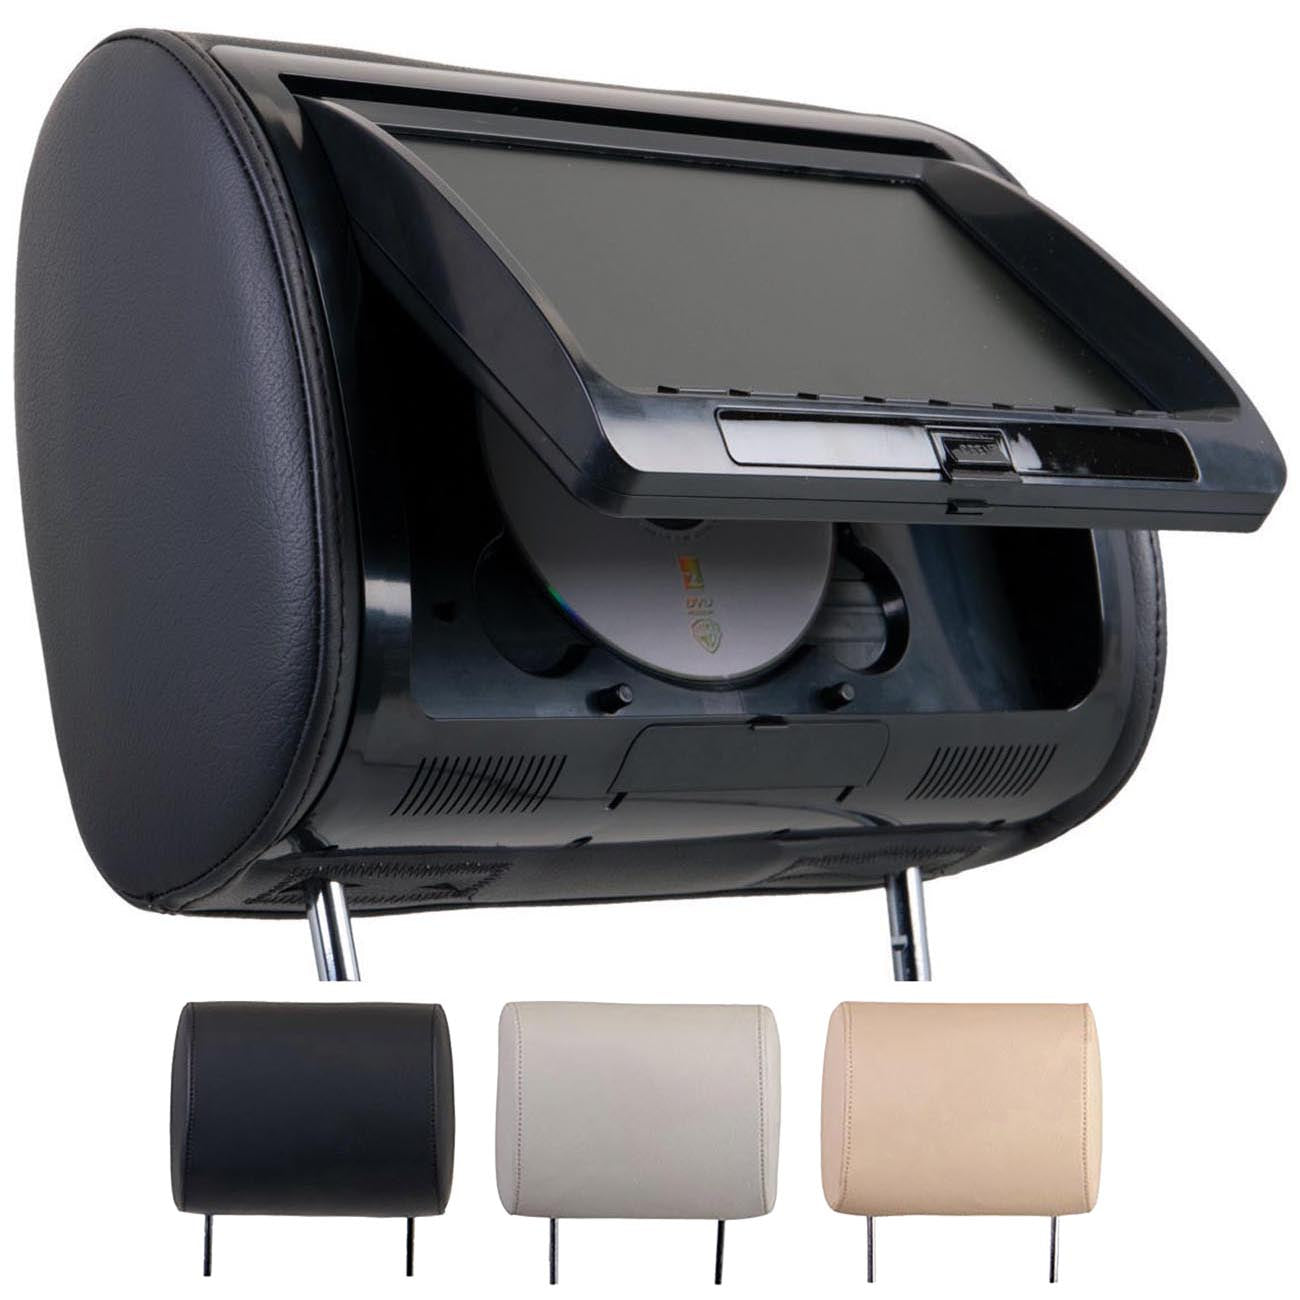 Power Acoustik 9" Headrest Monitor (single) With Dvd Player Ir/fm Transmitters Color Skins & Rem.